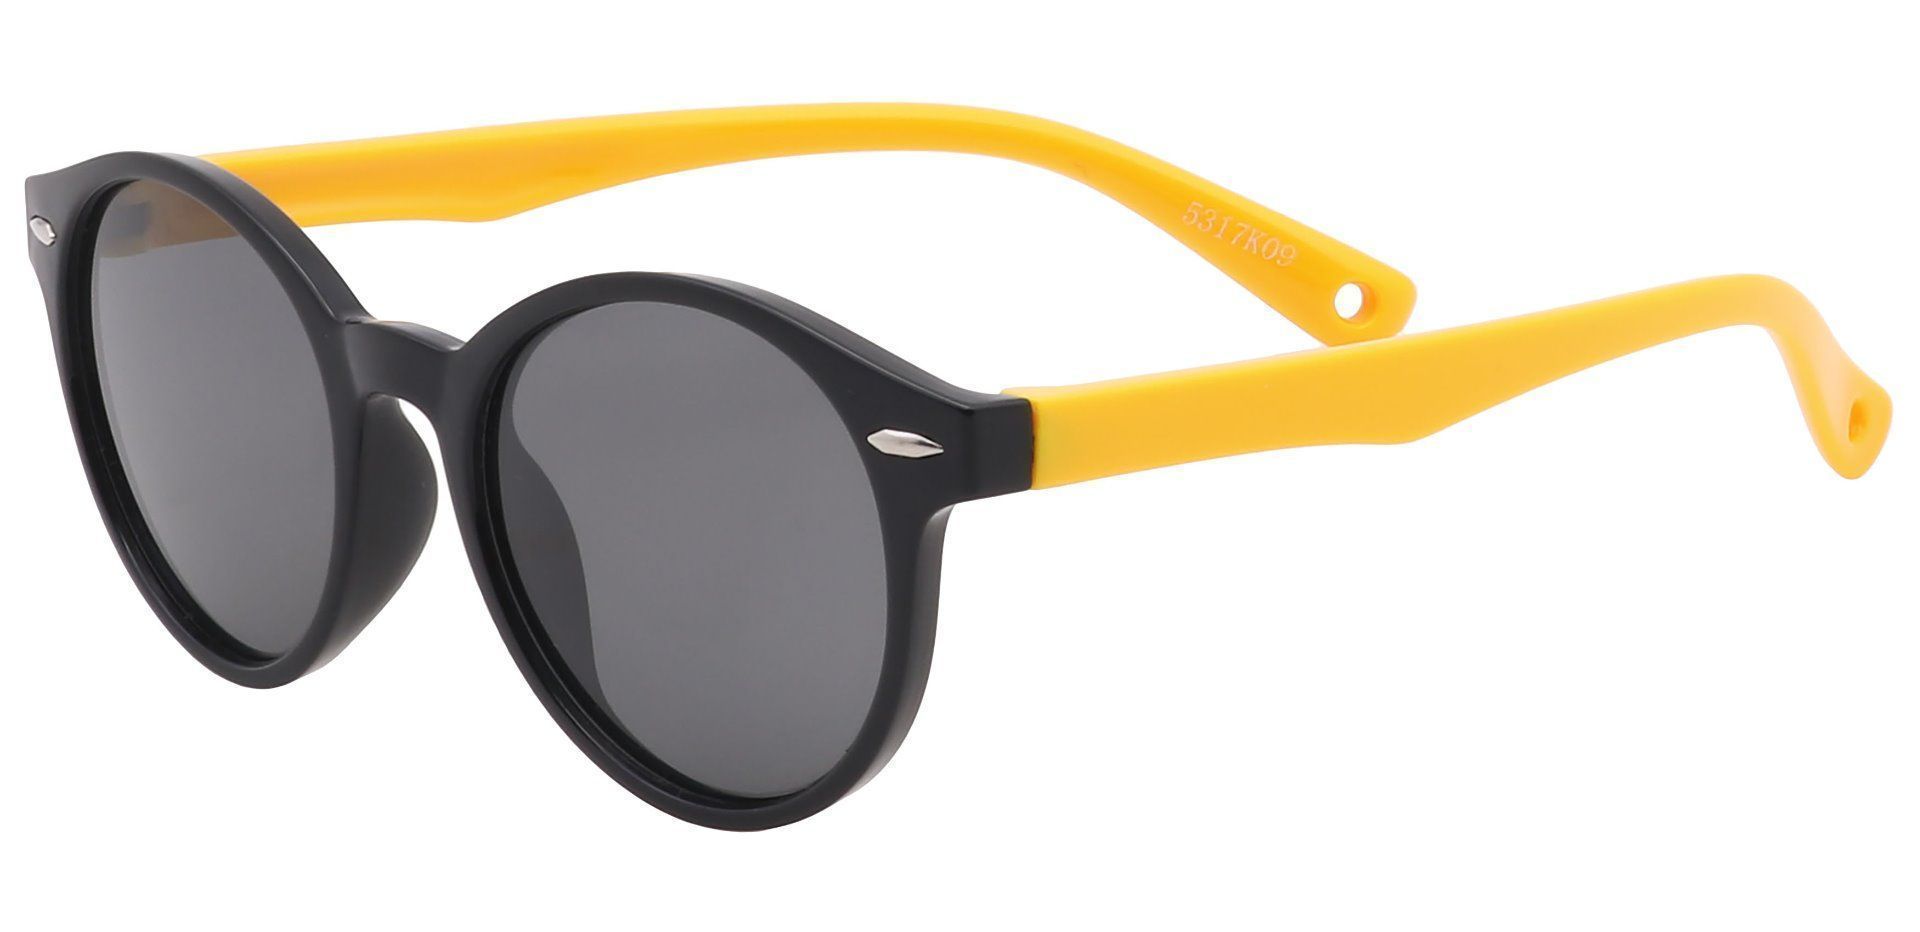 Harris Round Reading Sunglasses - Black Frame With Gray Lenses